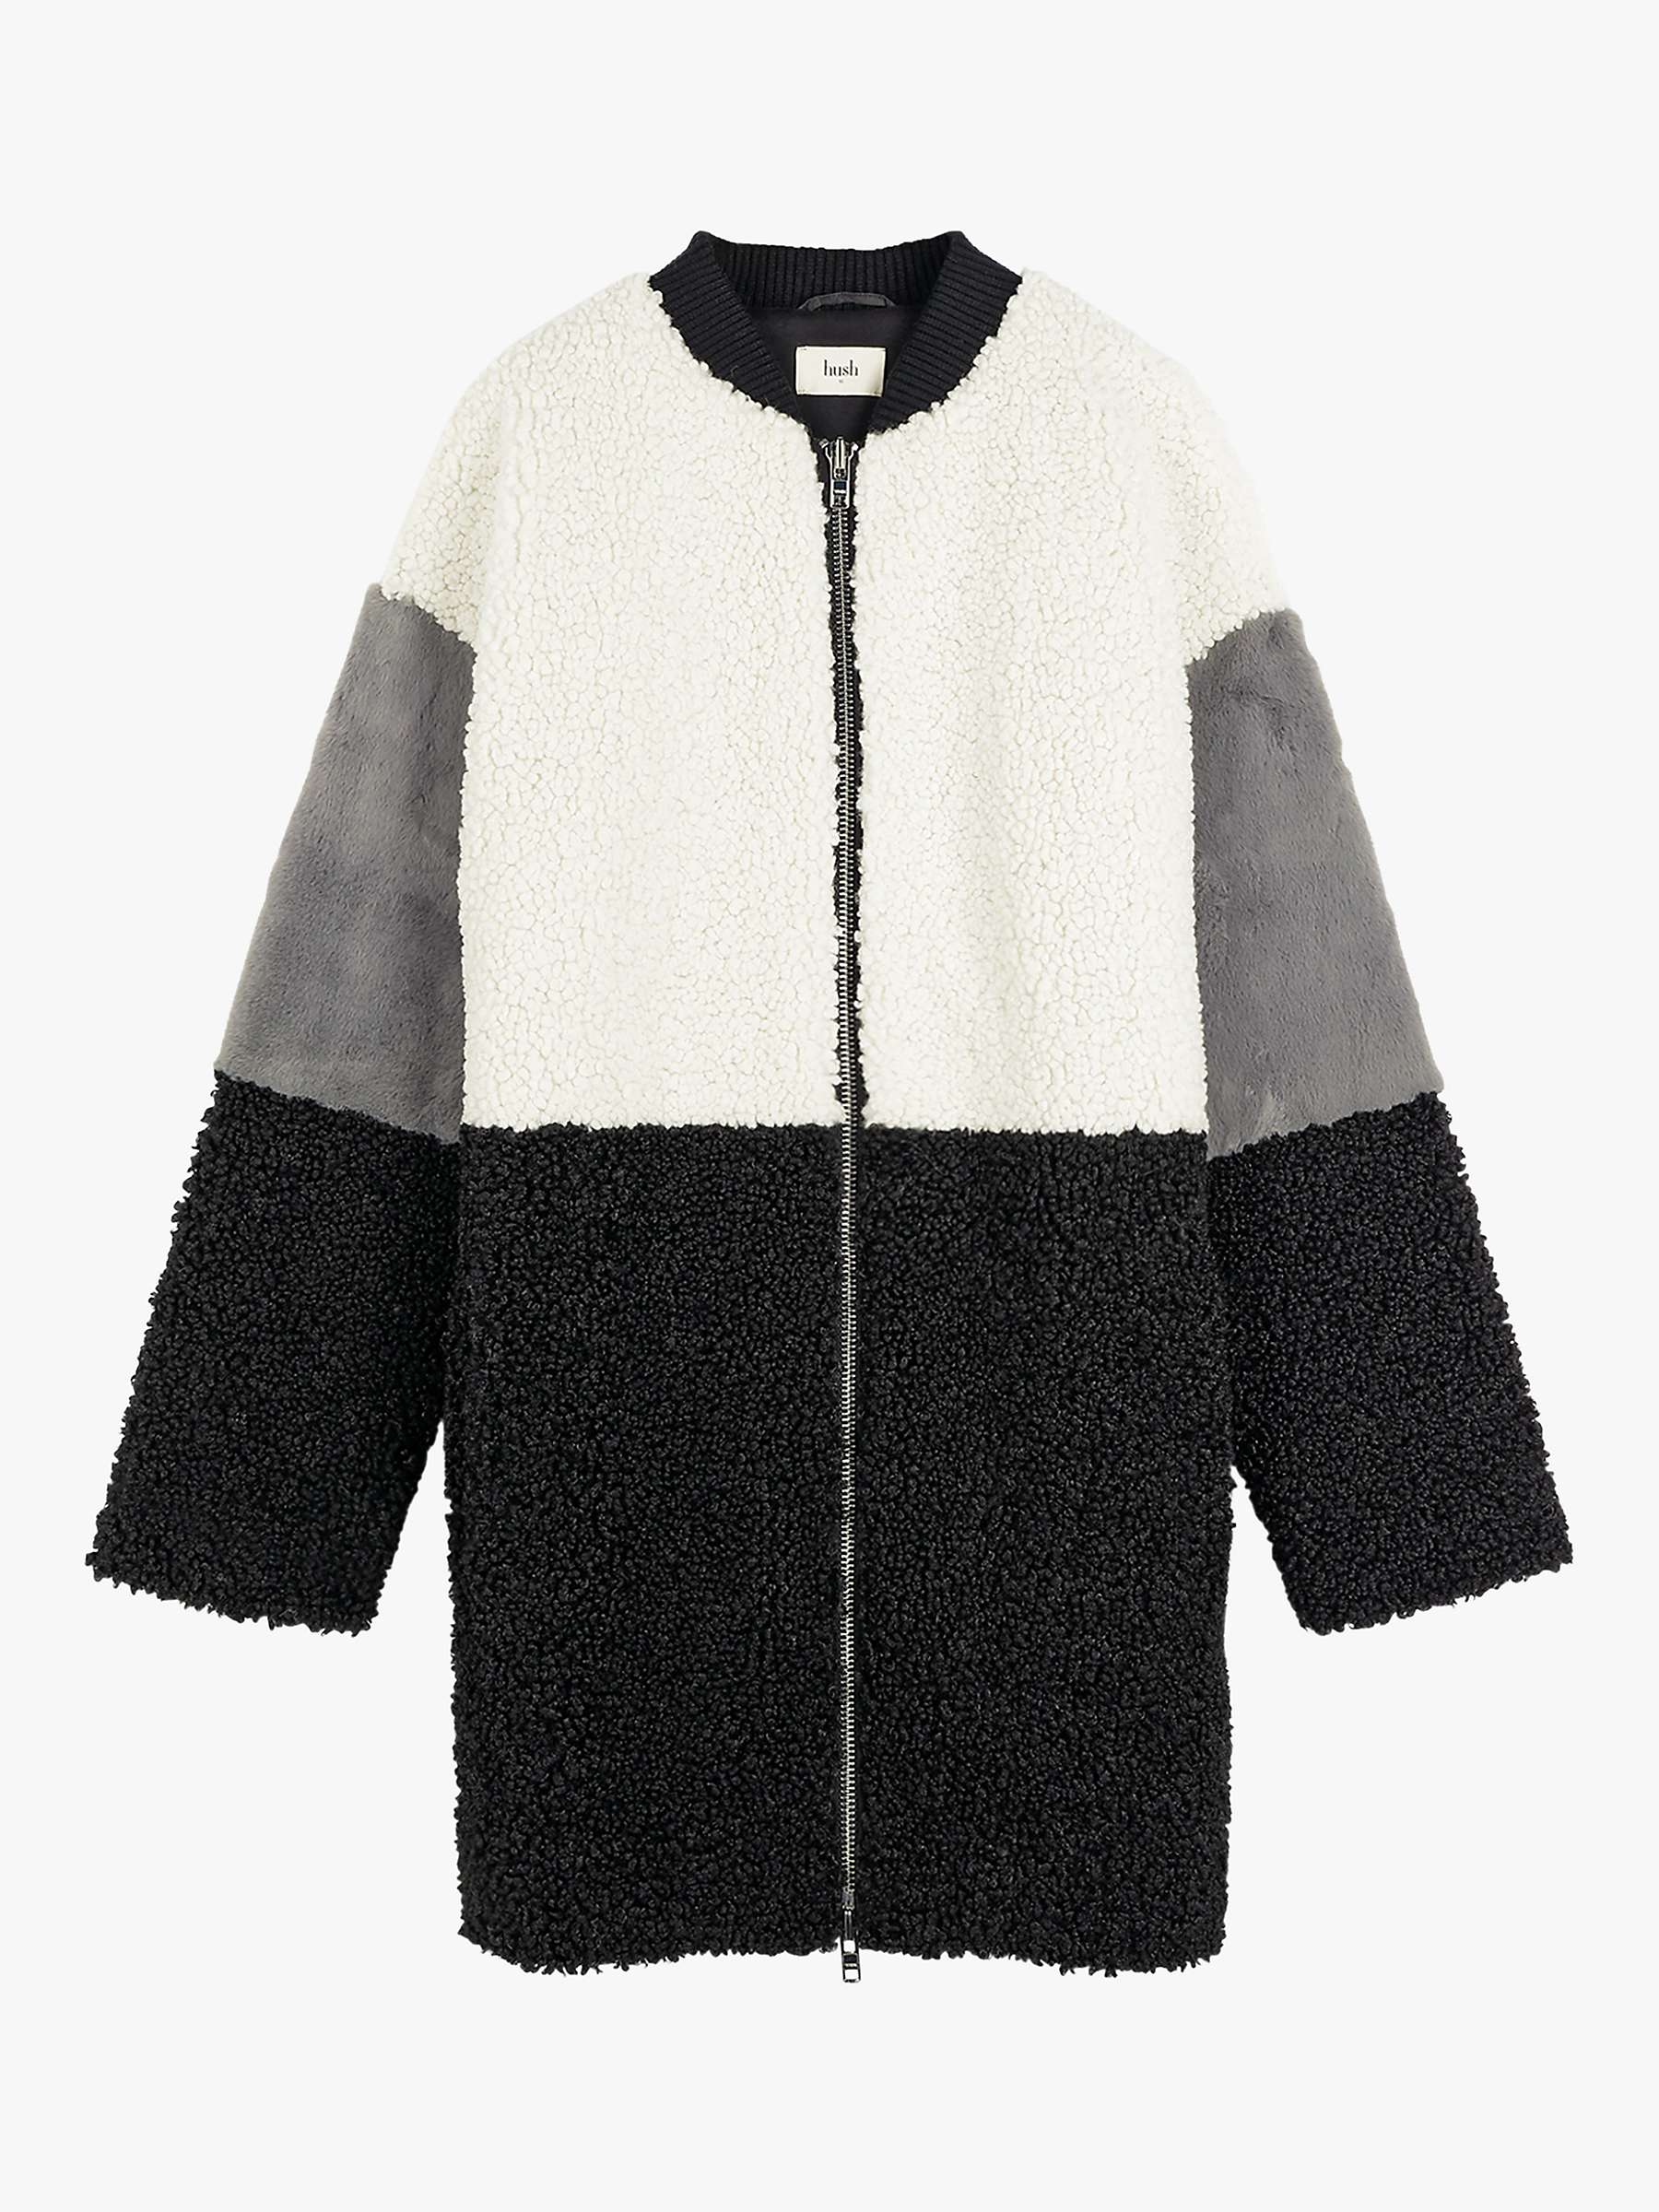 hush Rivage Colour Block Fur Coat, Black/Ecru/Grey at John Lewis & Partners